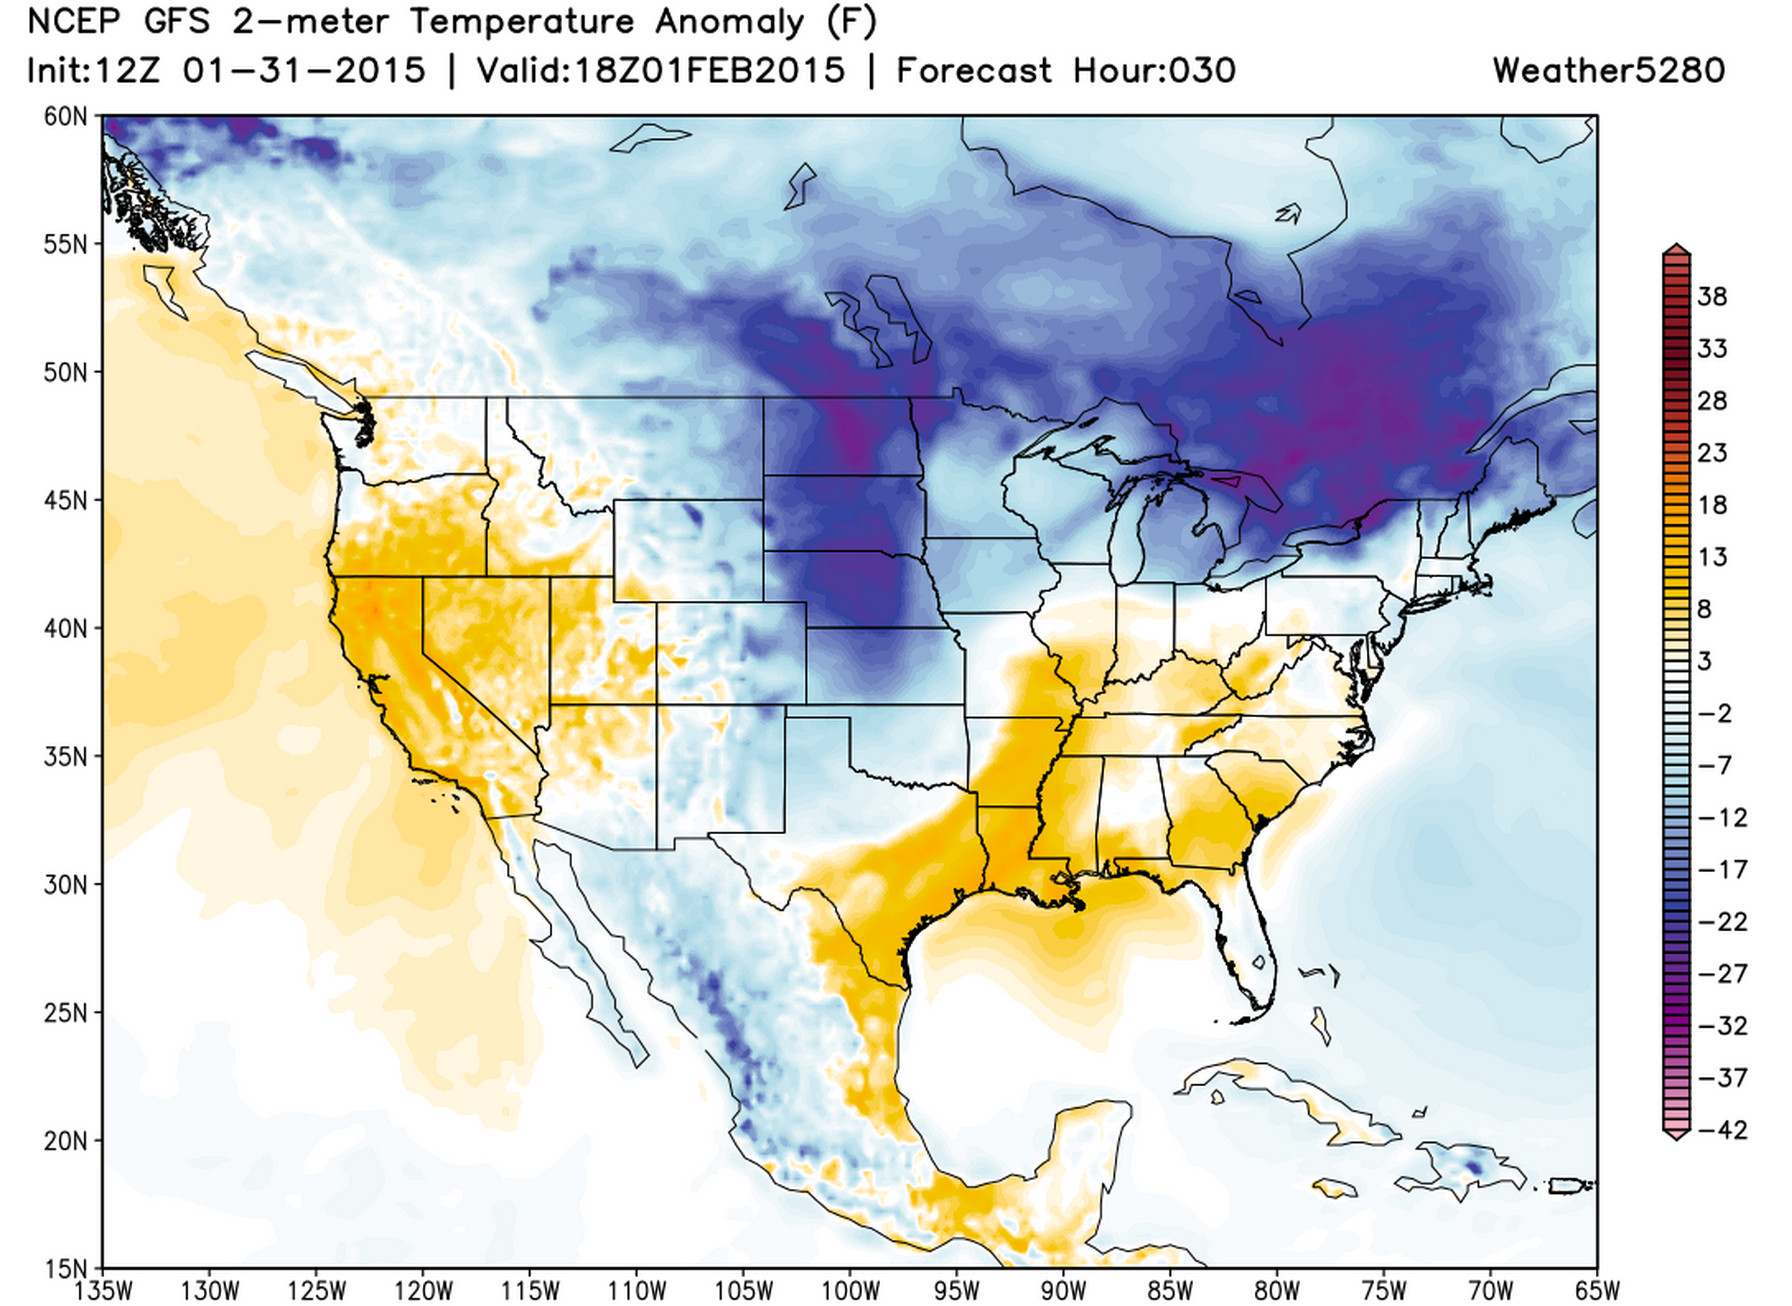 GFS 2-meter temperature anomalies Sunday | Weather5280 Models